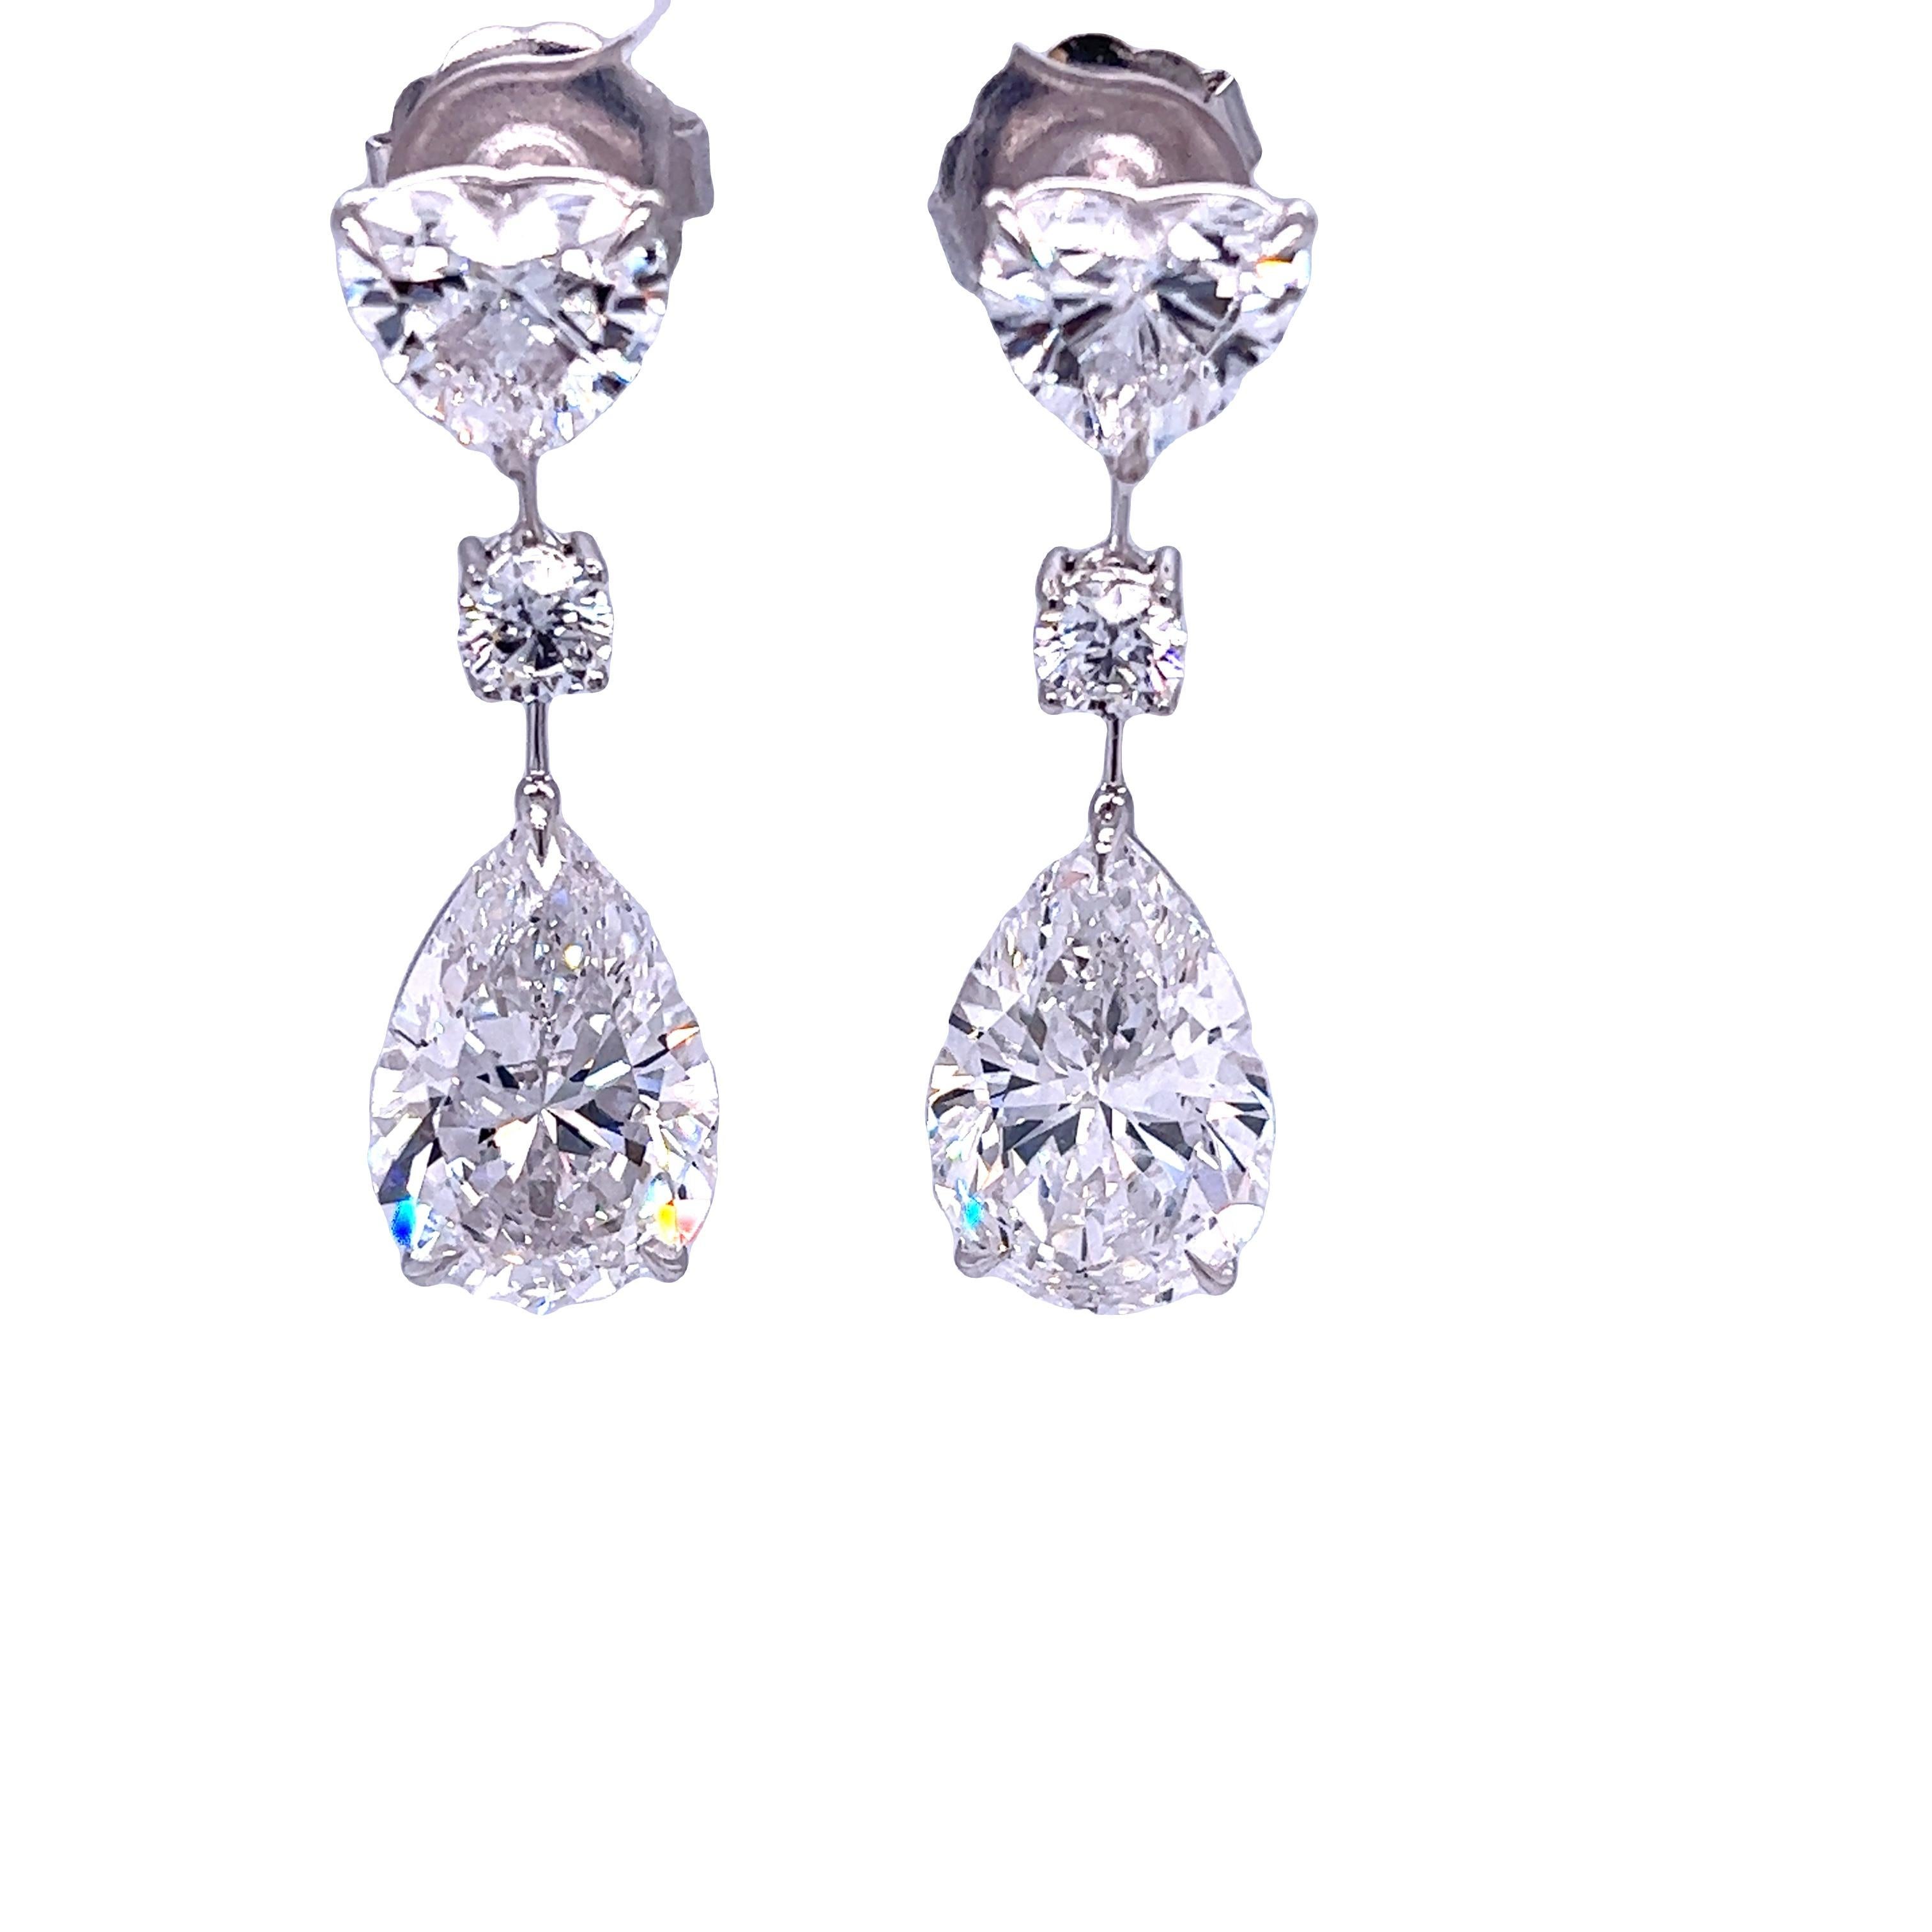 Modern David Rosenberg 16.72 Ct D Flawless GIA Pear Round & Heart Shape Diamond Earring For Sale